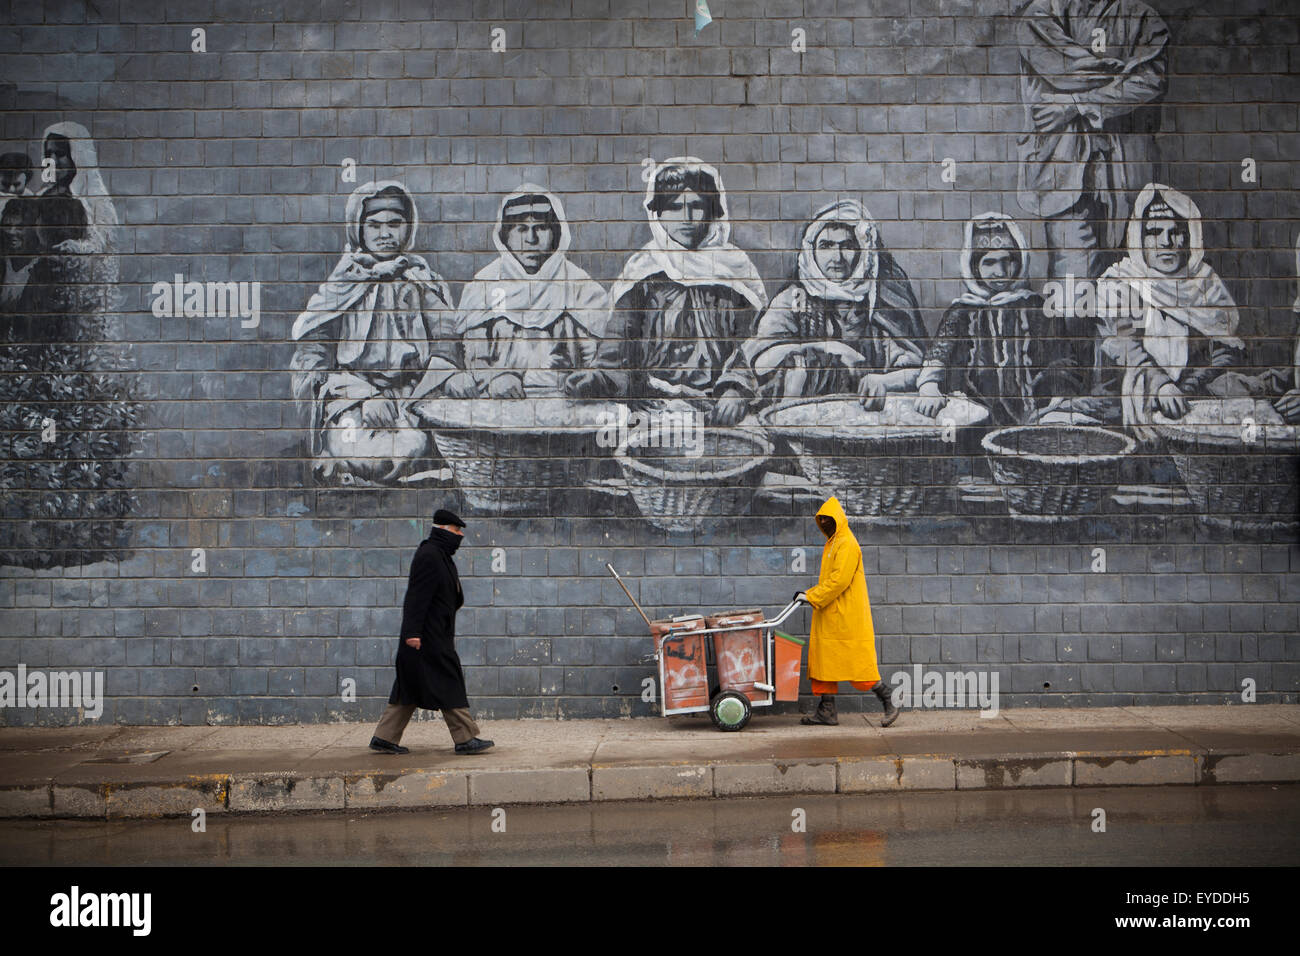 Street Cleaner In Front Of Mural Of Famous Kurdish People, Sulaymaniyah, Iraqi Kurdistan, Iraq Stock Photo